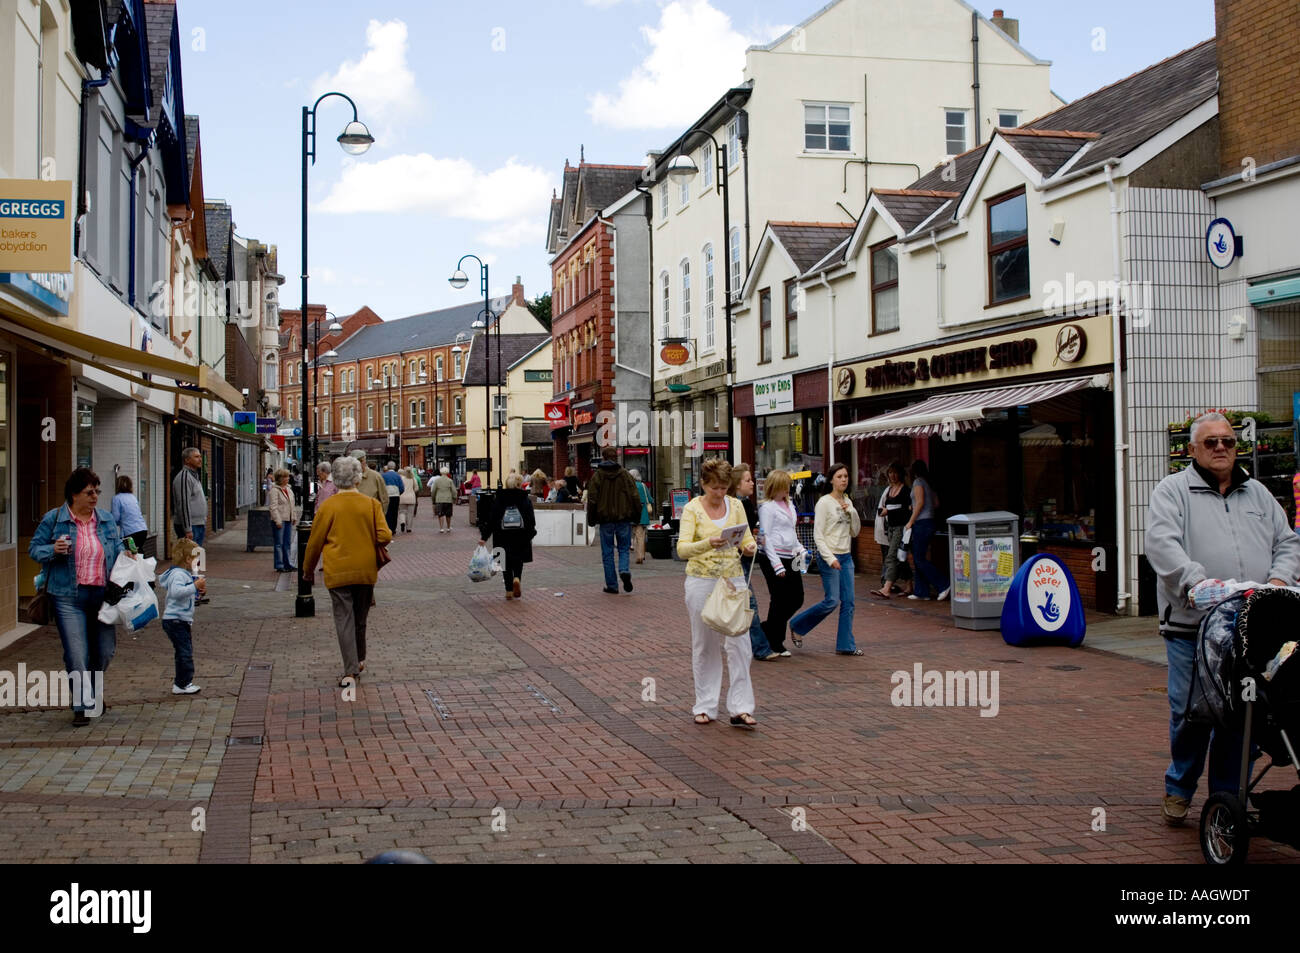 The pedestrianised main shopping street Amanford Ammanford carmarthenshire west wales UK Stock Photo